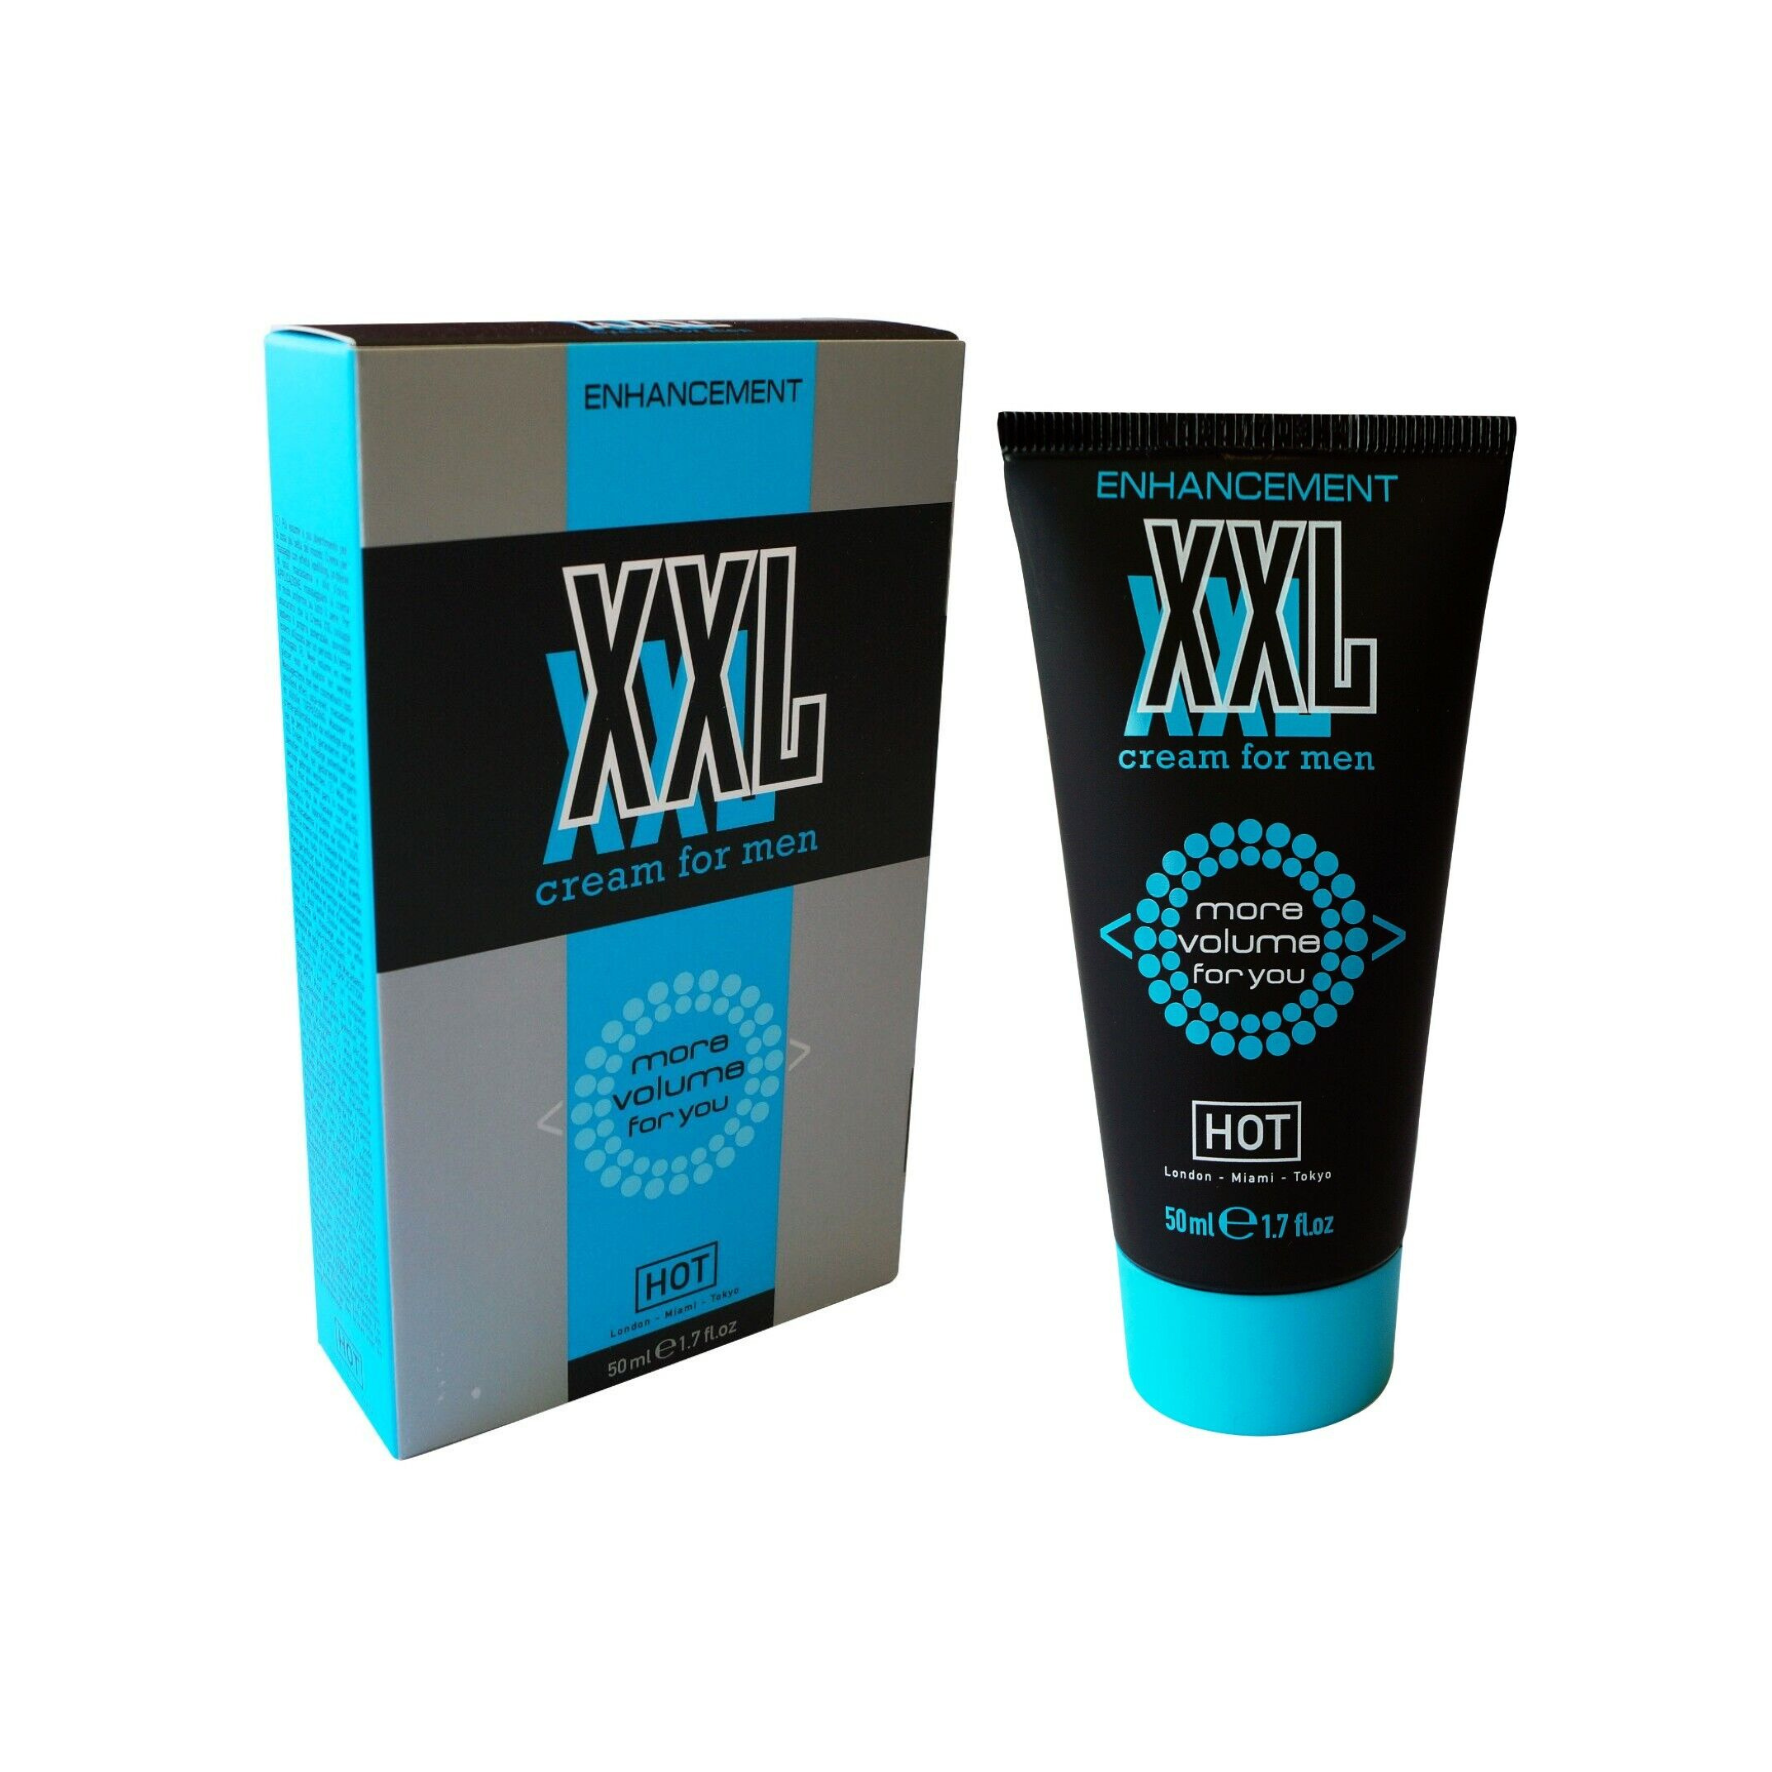 Penį didinantis kremas “HOT XXL Enhancement cream” - 50 ml